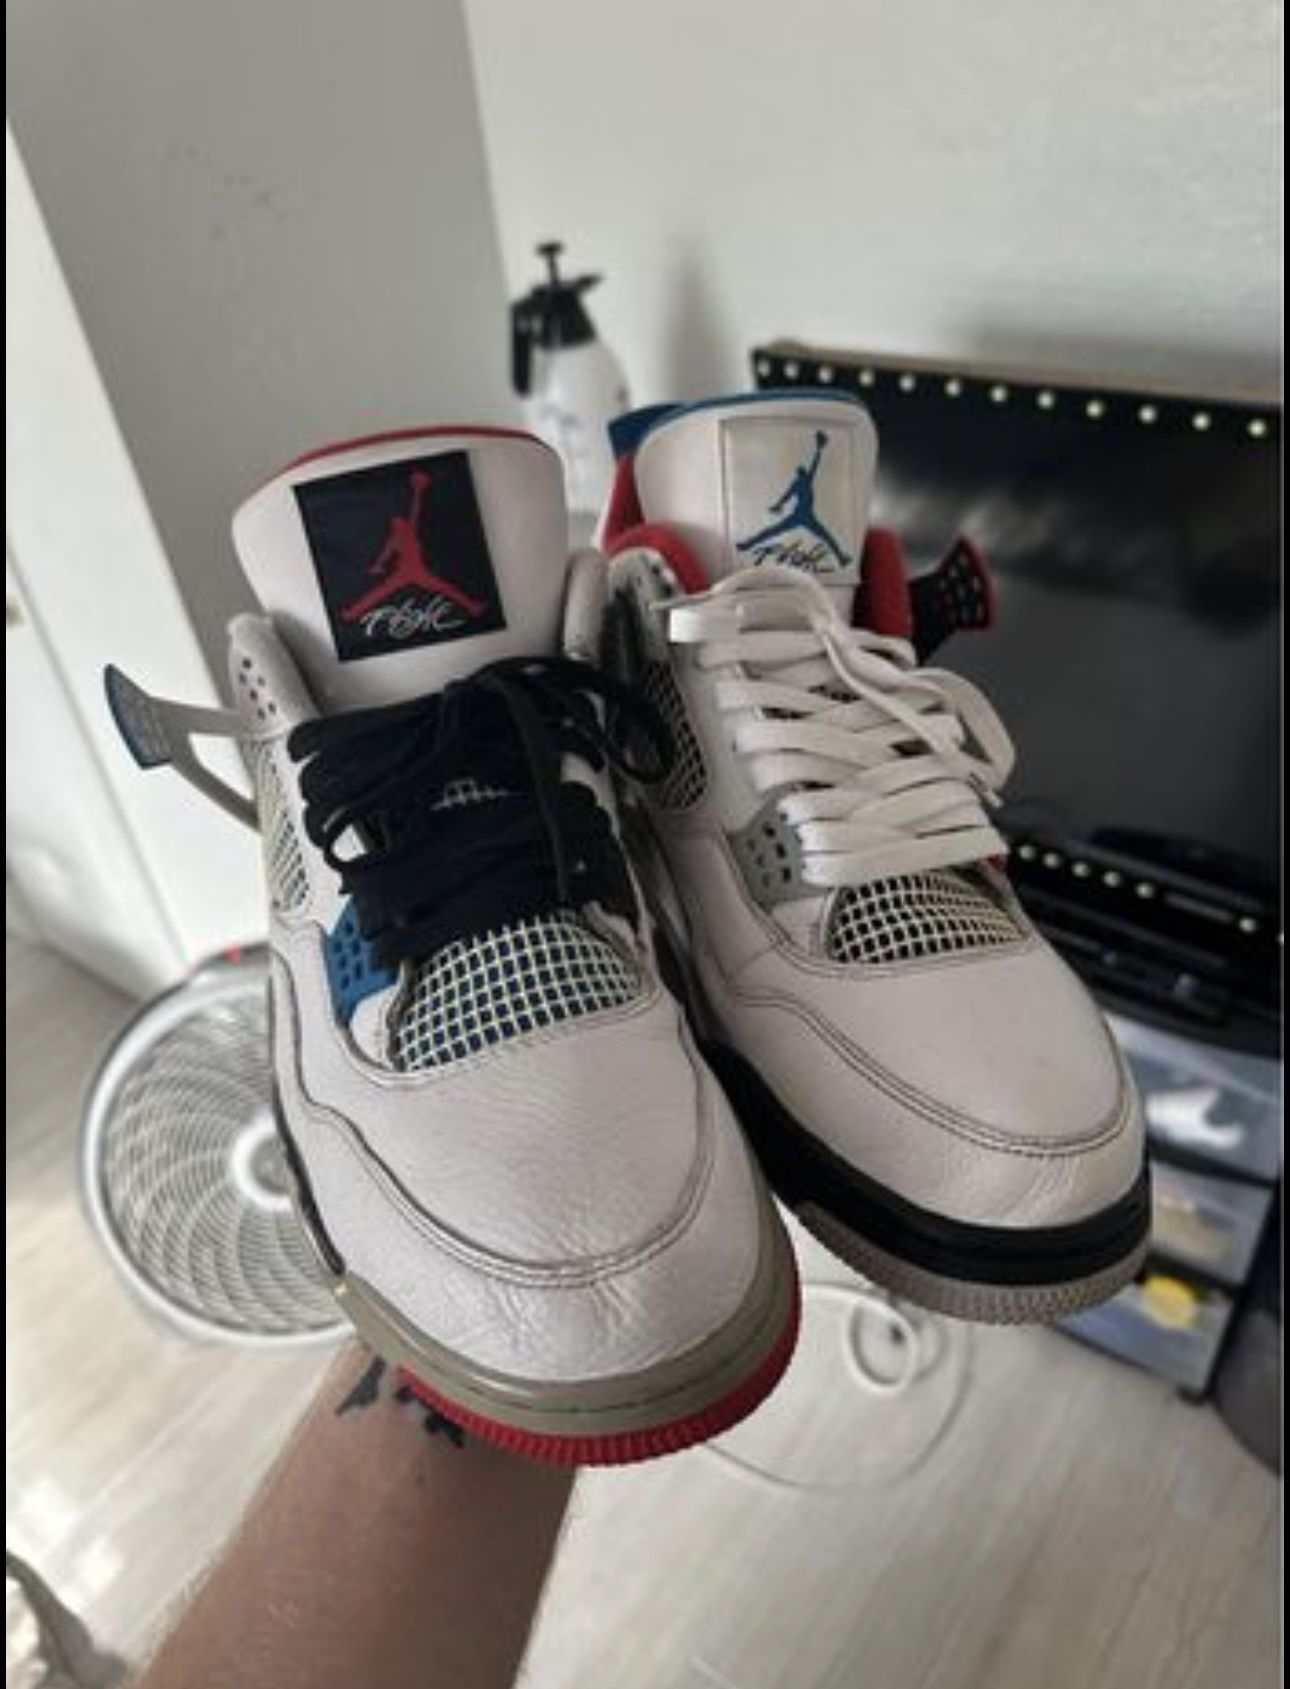 Retro Jordan 4 “What The”